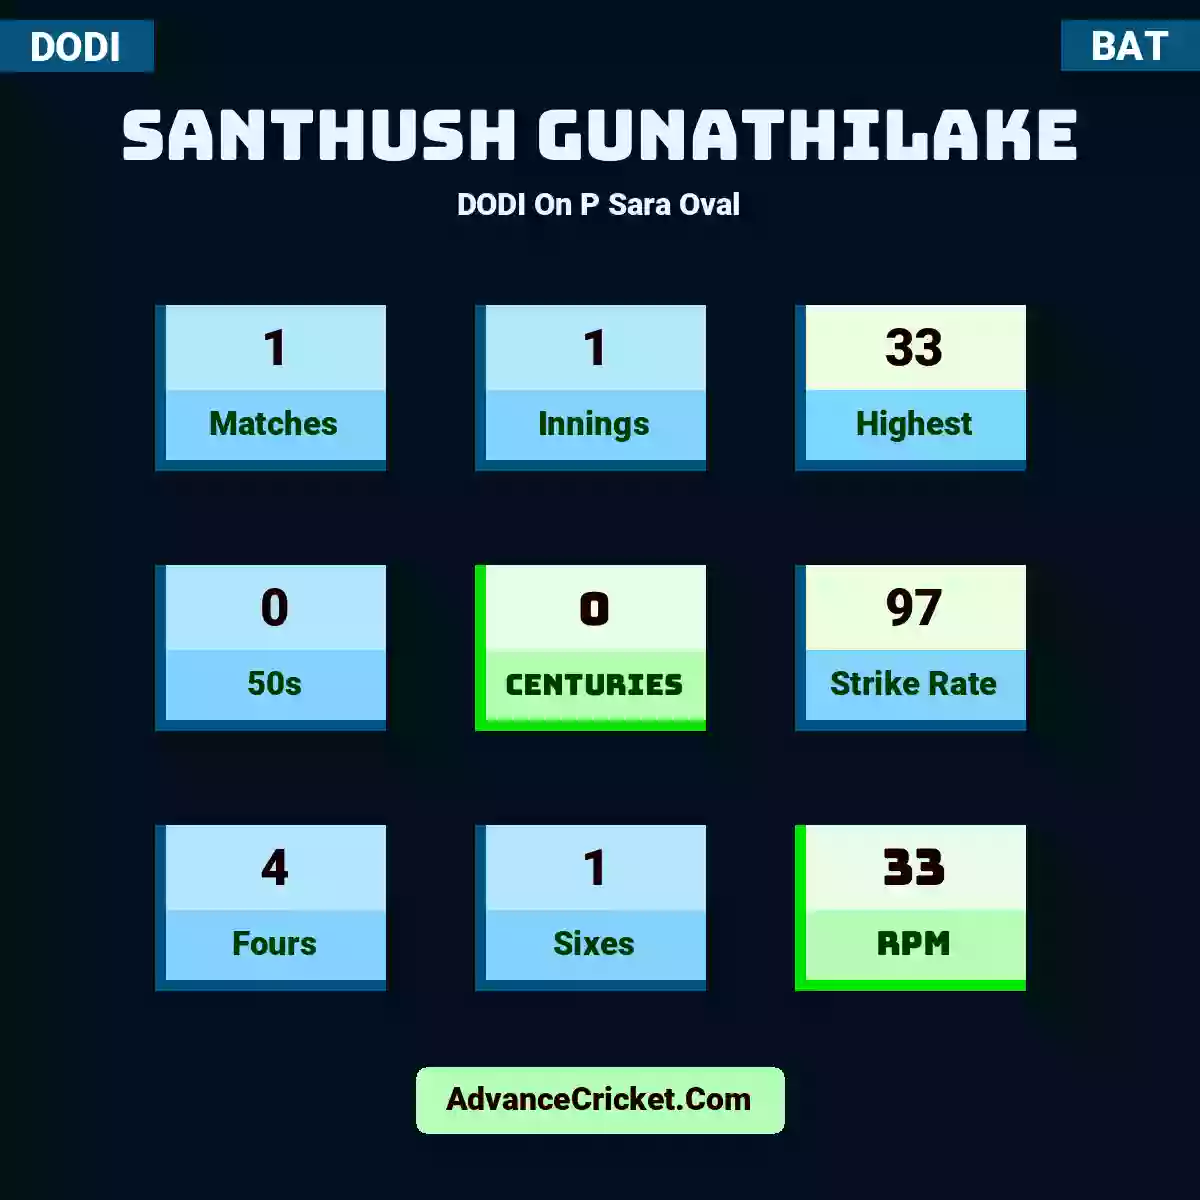 Santhush Gunathilake DODI  On P Sara Oval, Santhush Gunathilake played 1 matches, scored 33 runs as highest, 0 half-centuries, and 0 centuries, with a strike rate of 97. S.Gunathilake hit 4 fours and 1 sixes, with an RPM of 33.